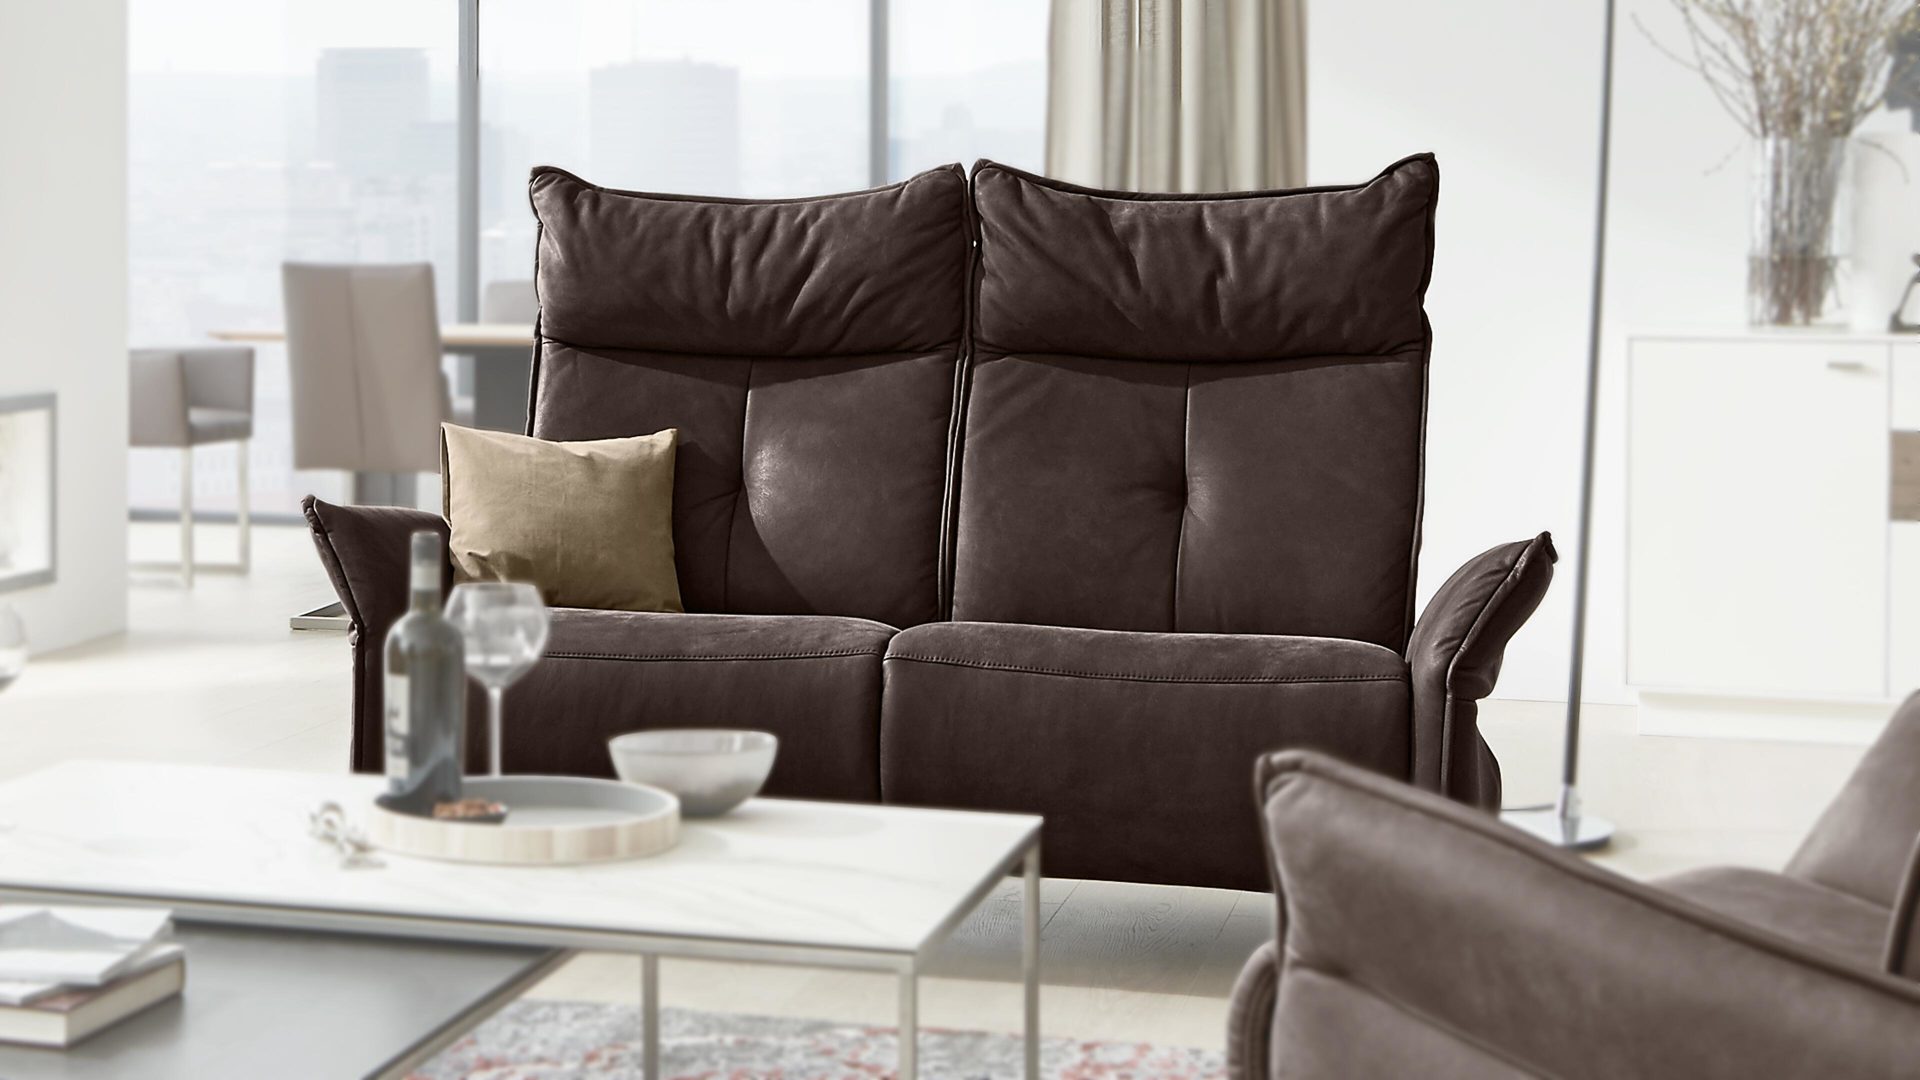 Interliving Sofa Serie 4200 2 5 Sitzer Als Couch Dunkelbraunes Leder Buffalo Wisent Lange Ca 182 Cm